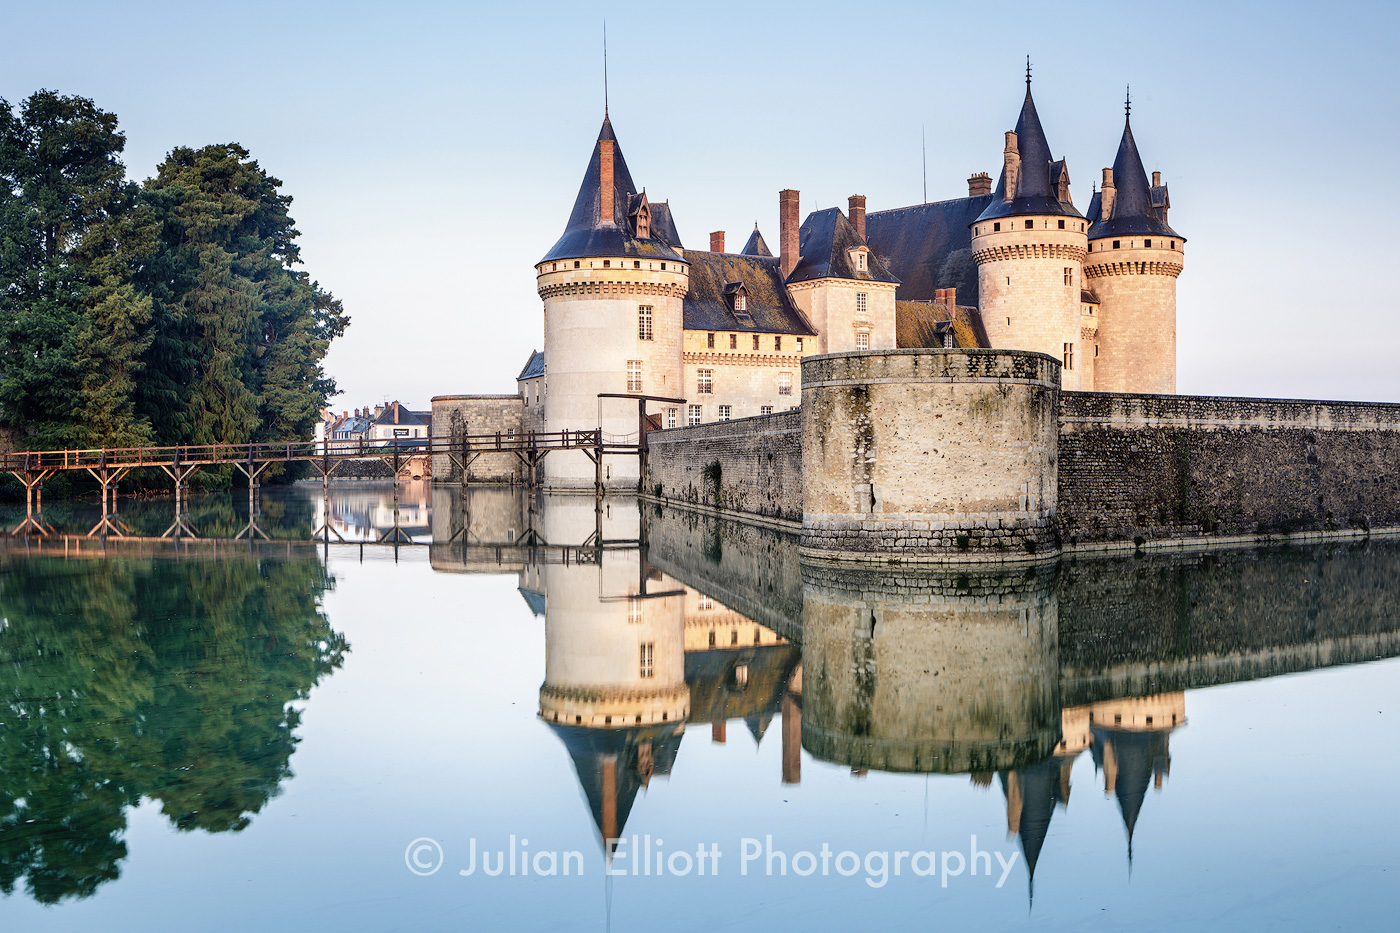 The Chateau de Sully-sur-Loire in France.